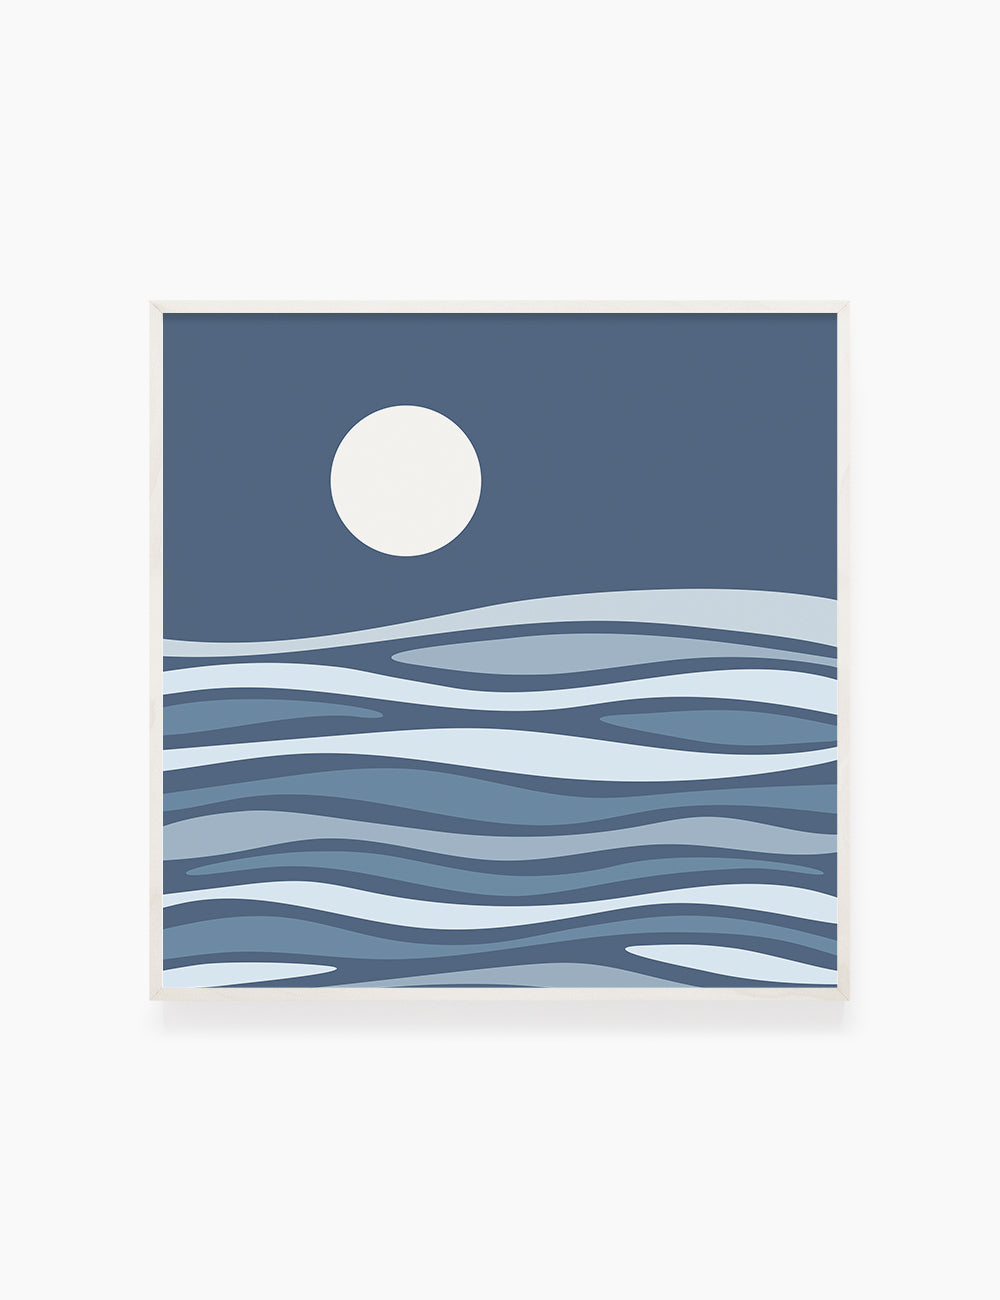 FULL MOON OVER THE BLUE OCEAN WAVES. BOHO ART. Minimalist. Abstract. Printable Wall Art Illustration. - PAPER MOON Art & Design